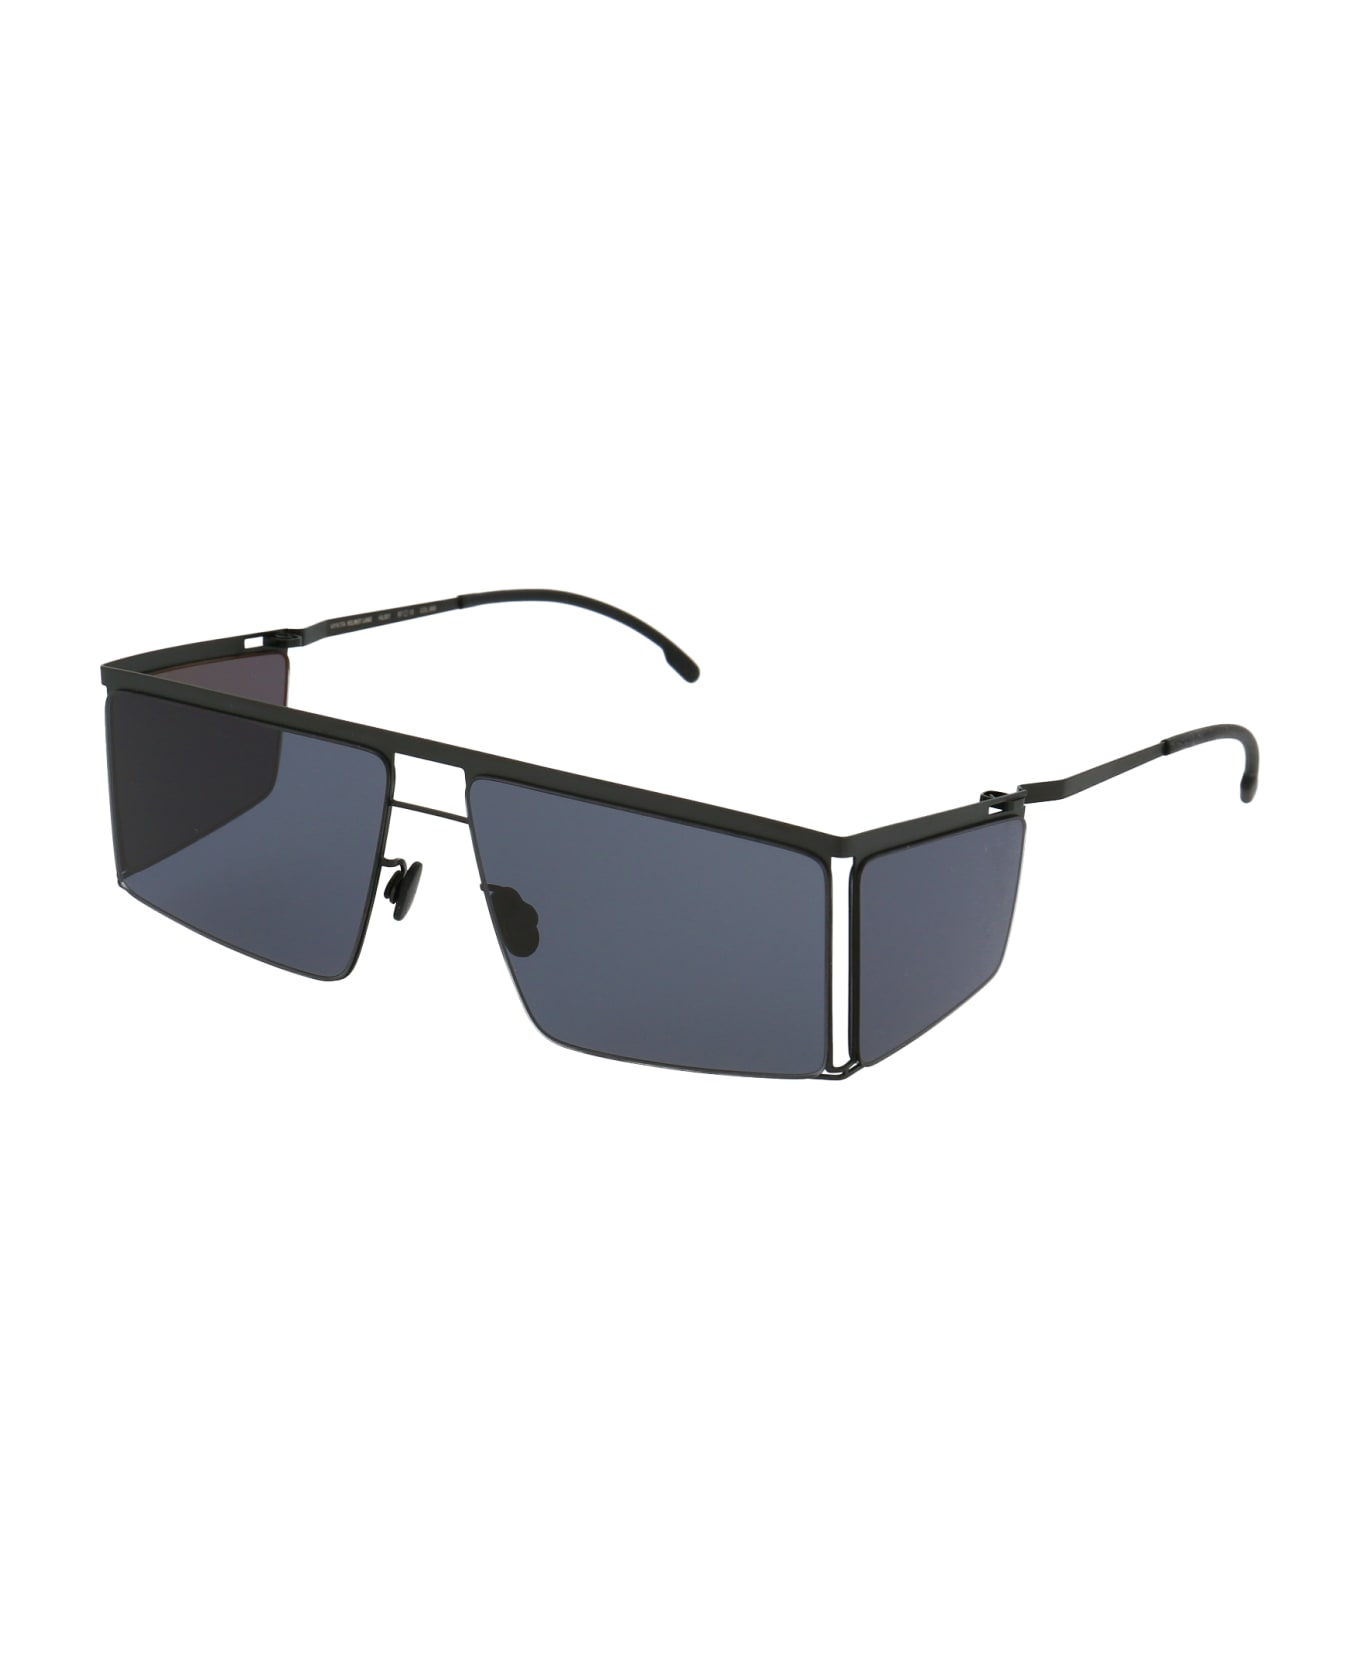 Mykita Hl001 Sunglasses - 868 Black/Dark Grey Sides Darkgrey Solid